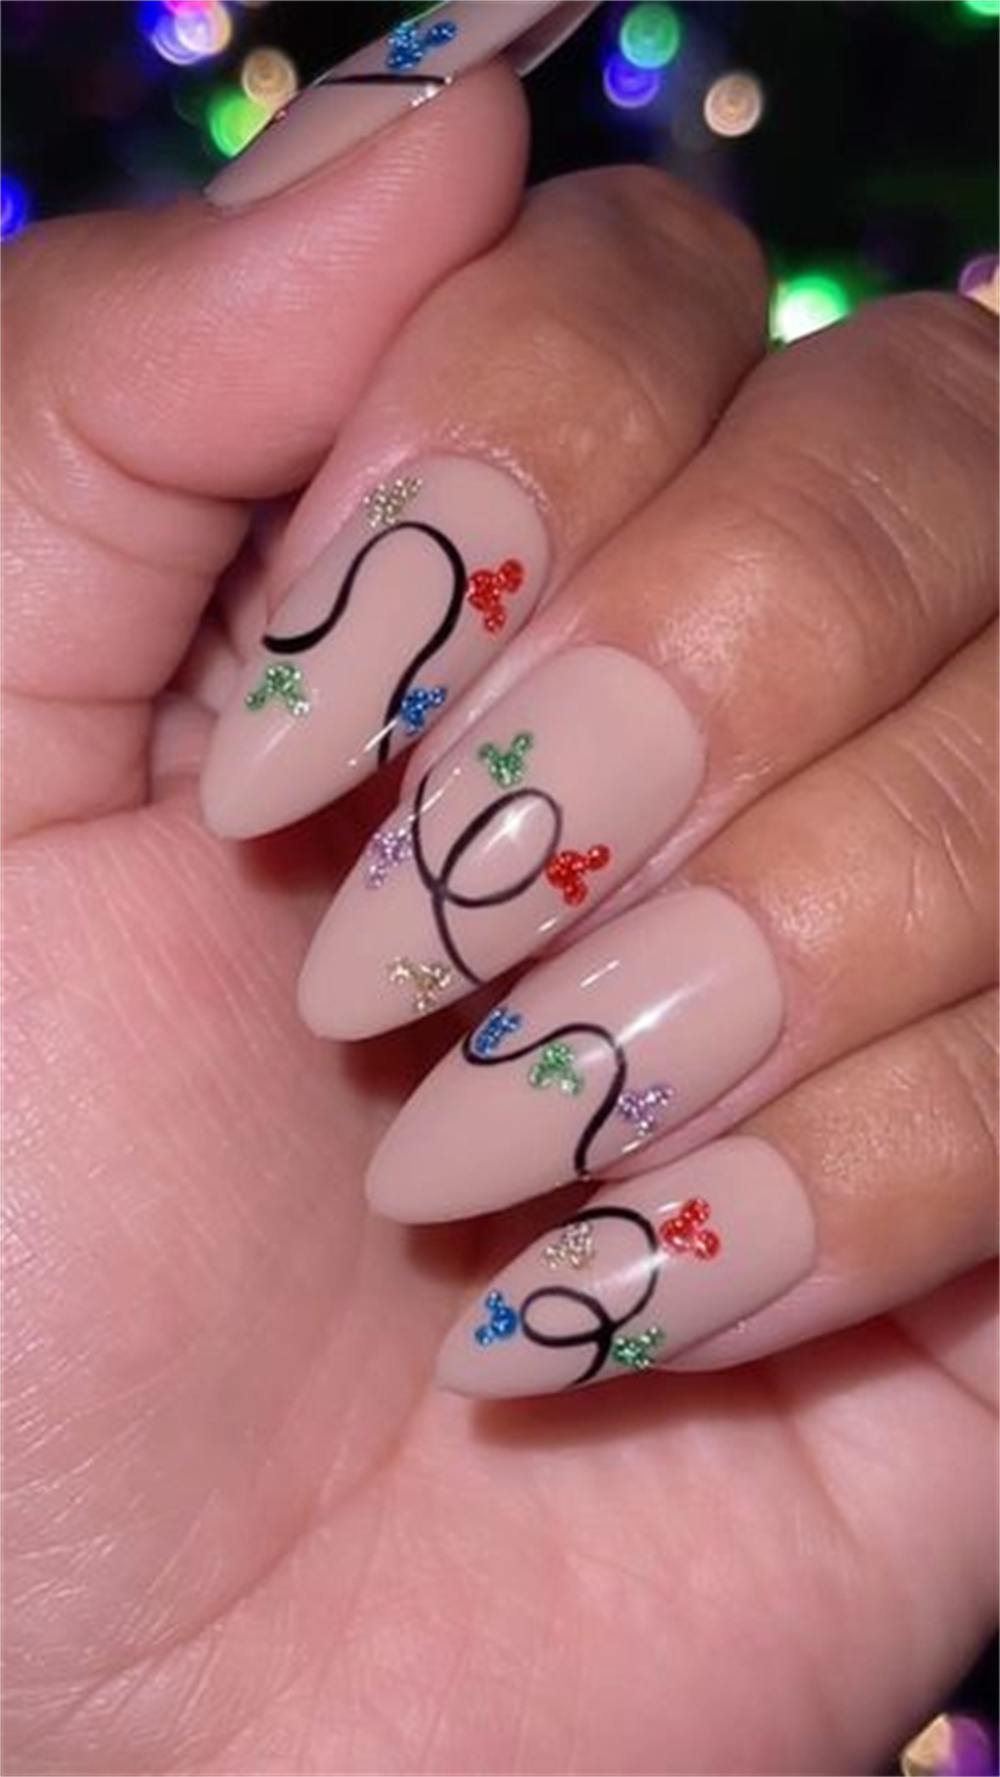 nails with Christmas lights nail art